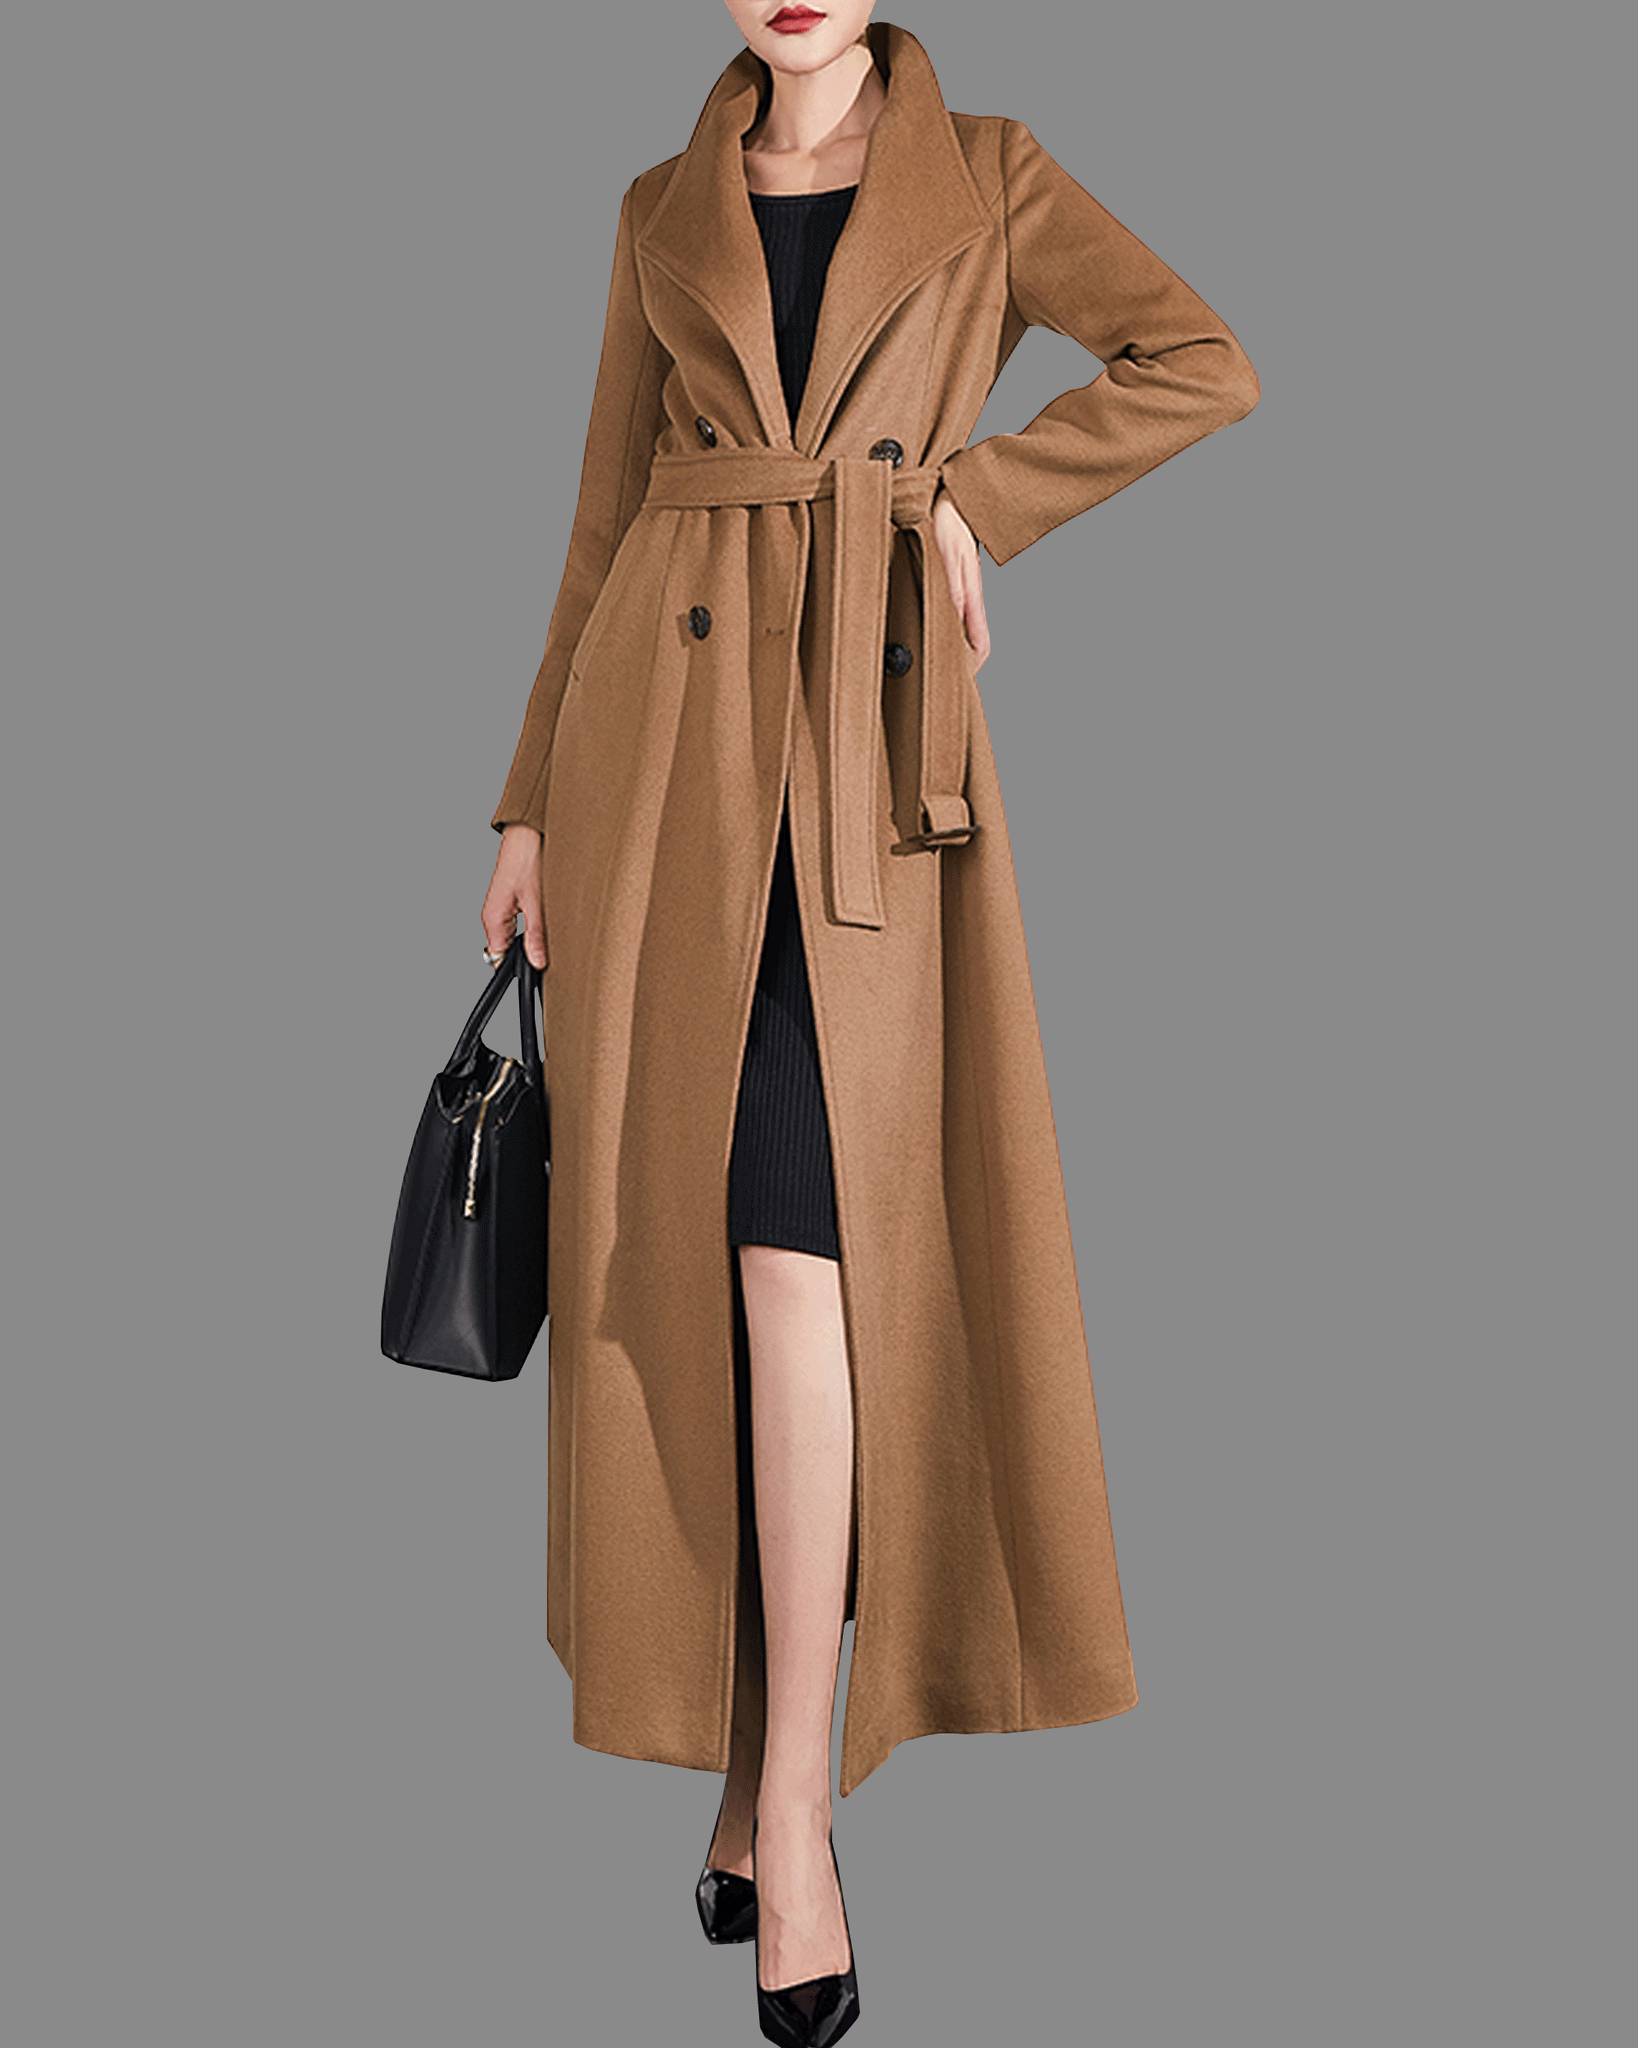 Women wool coat, winter coat, long jacket, jacket with belt, coat